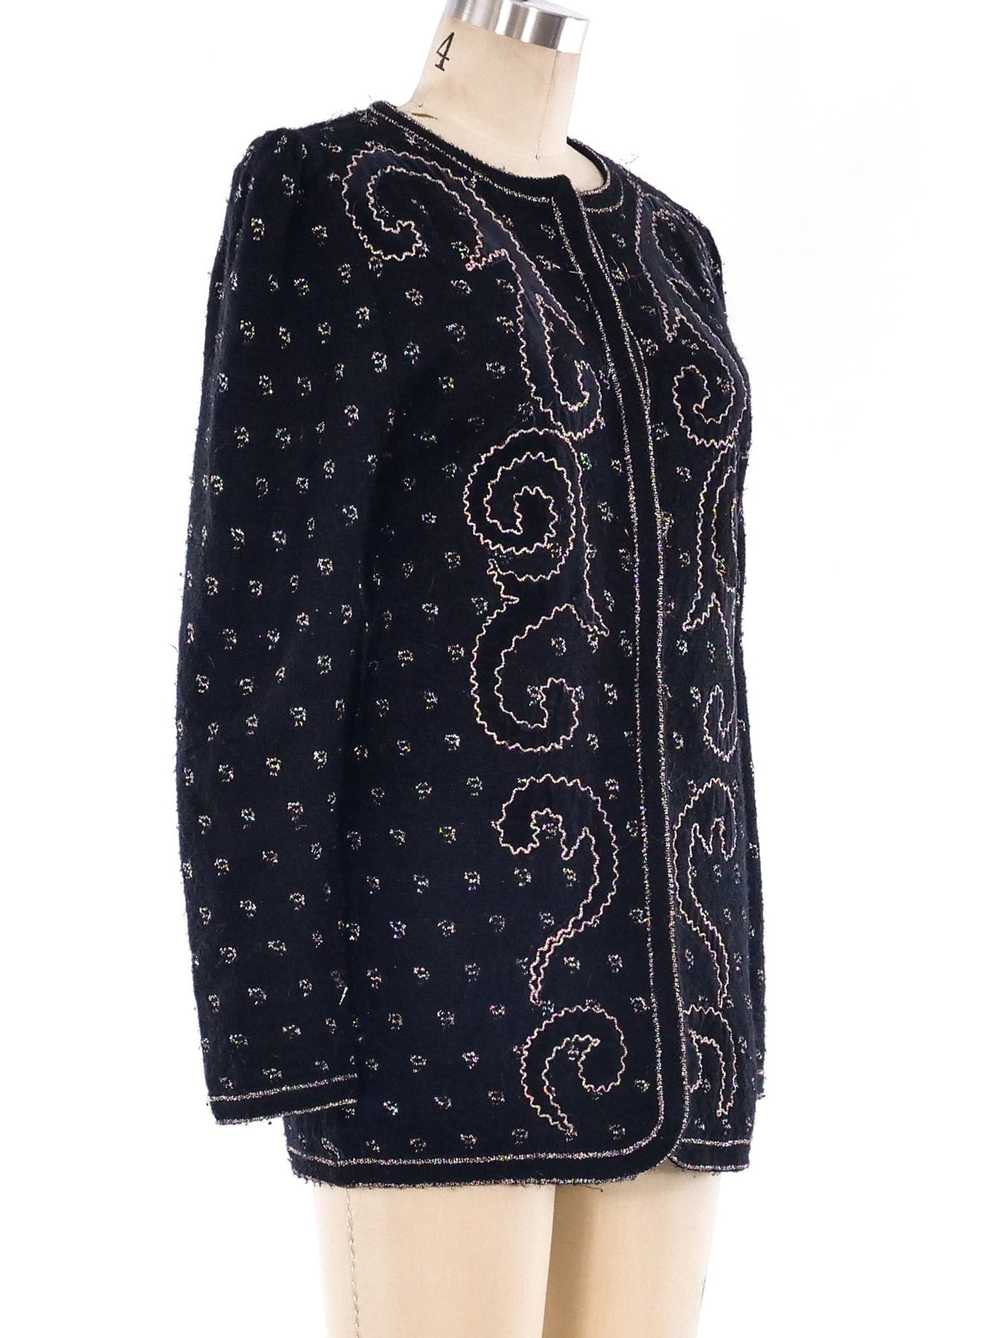 Yves Saint Laurent Lurex Knit Cardigan - image 3